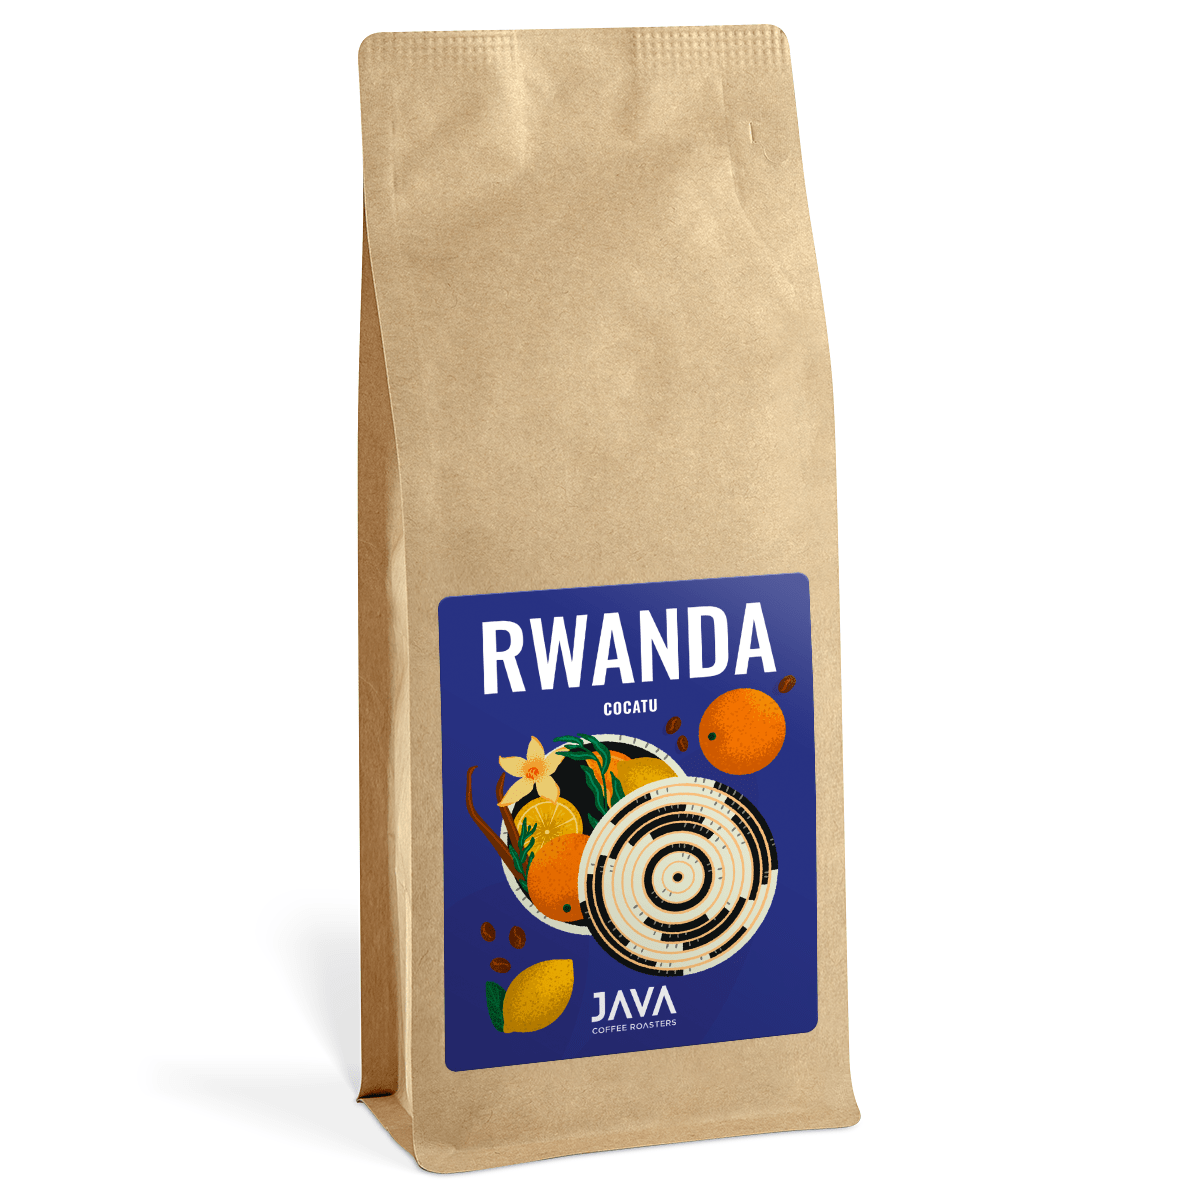 Rwanda Cocatu